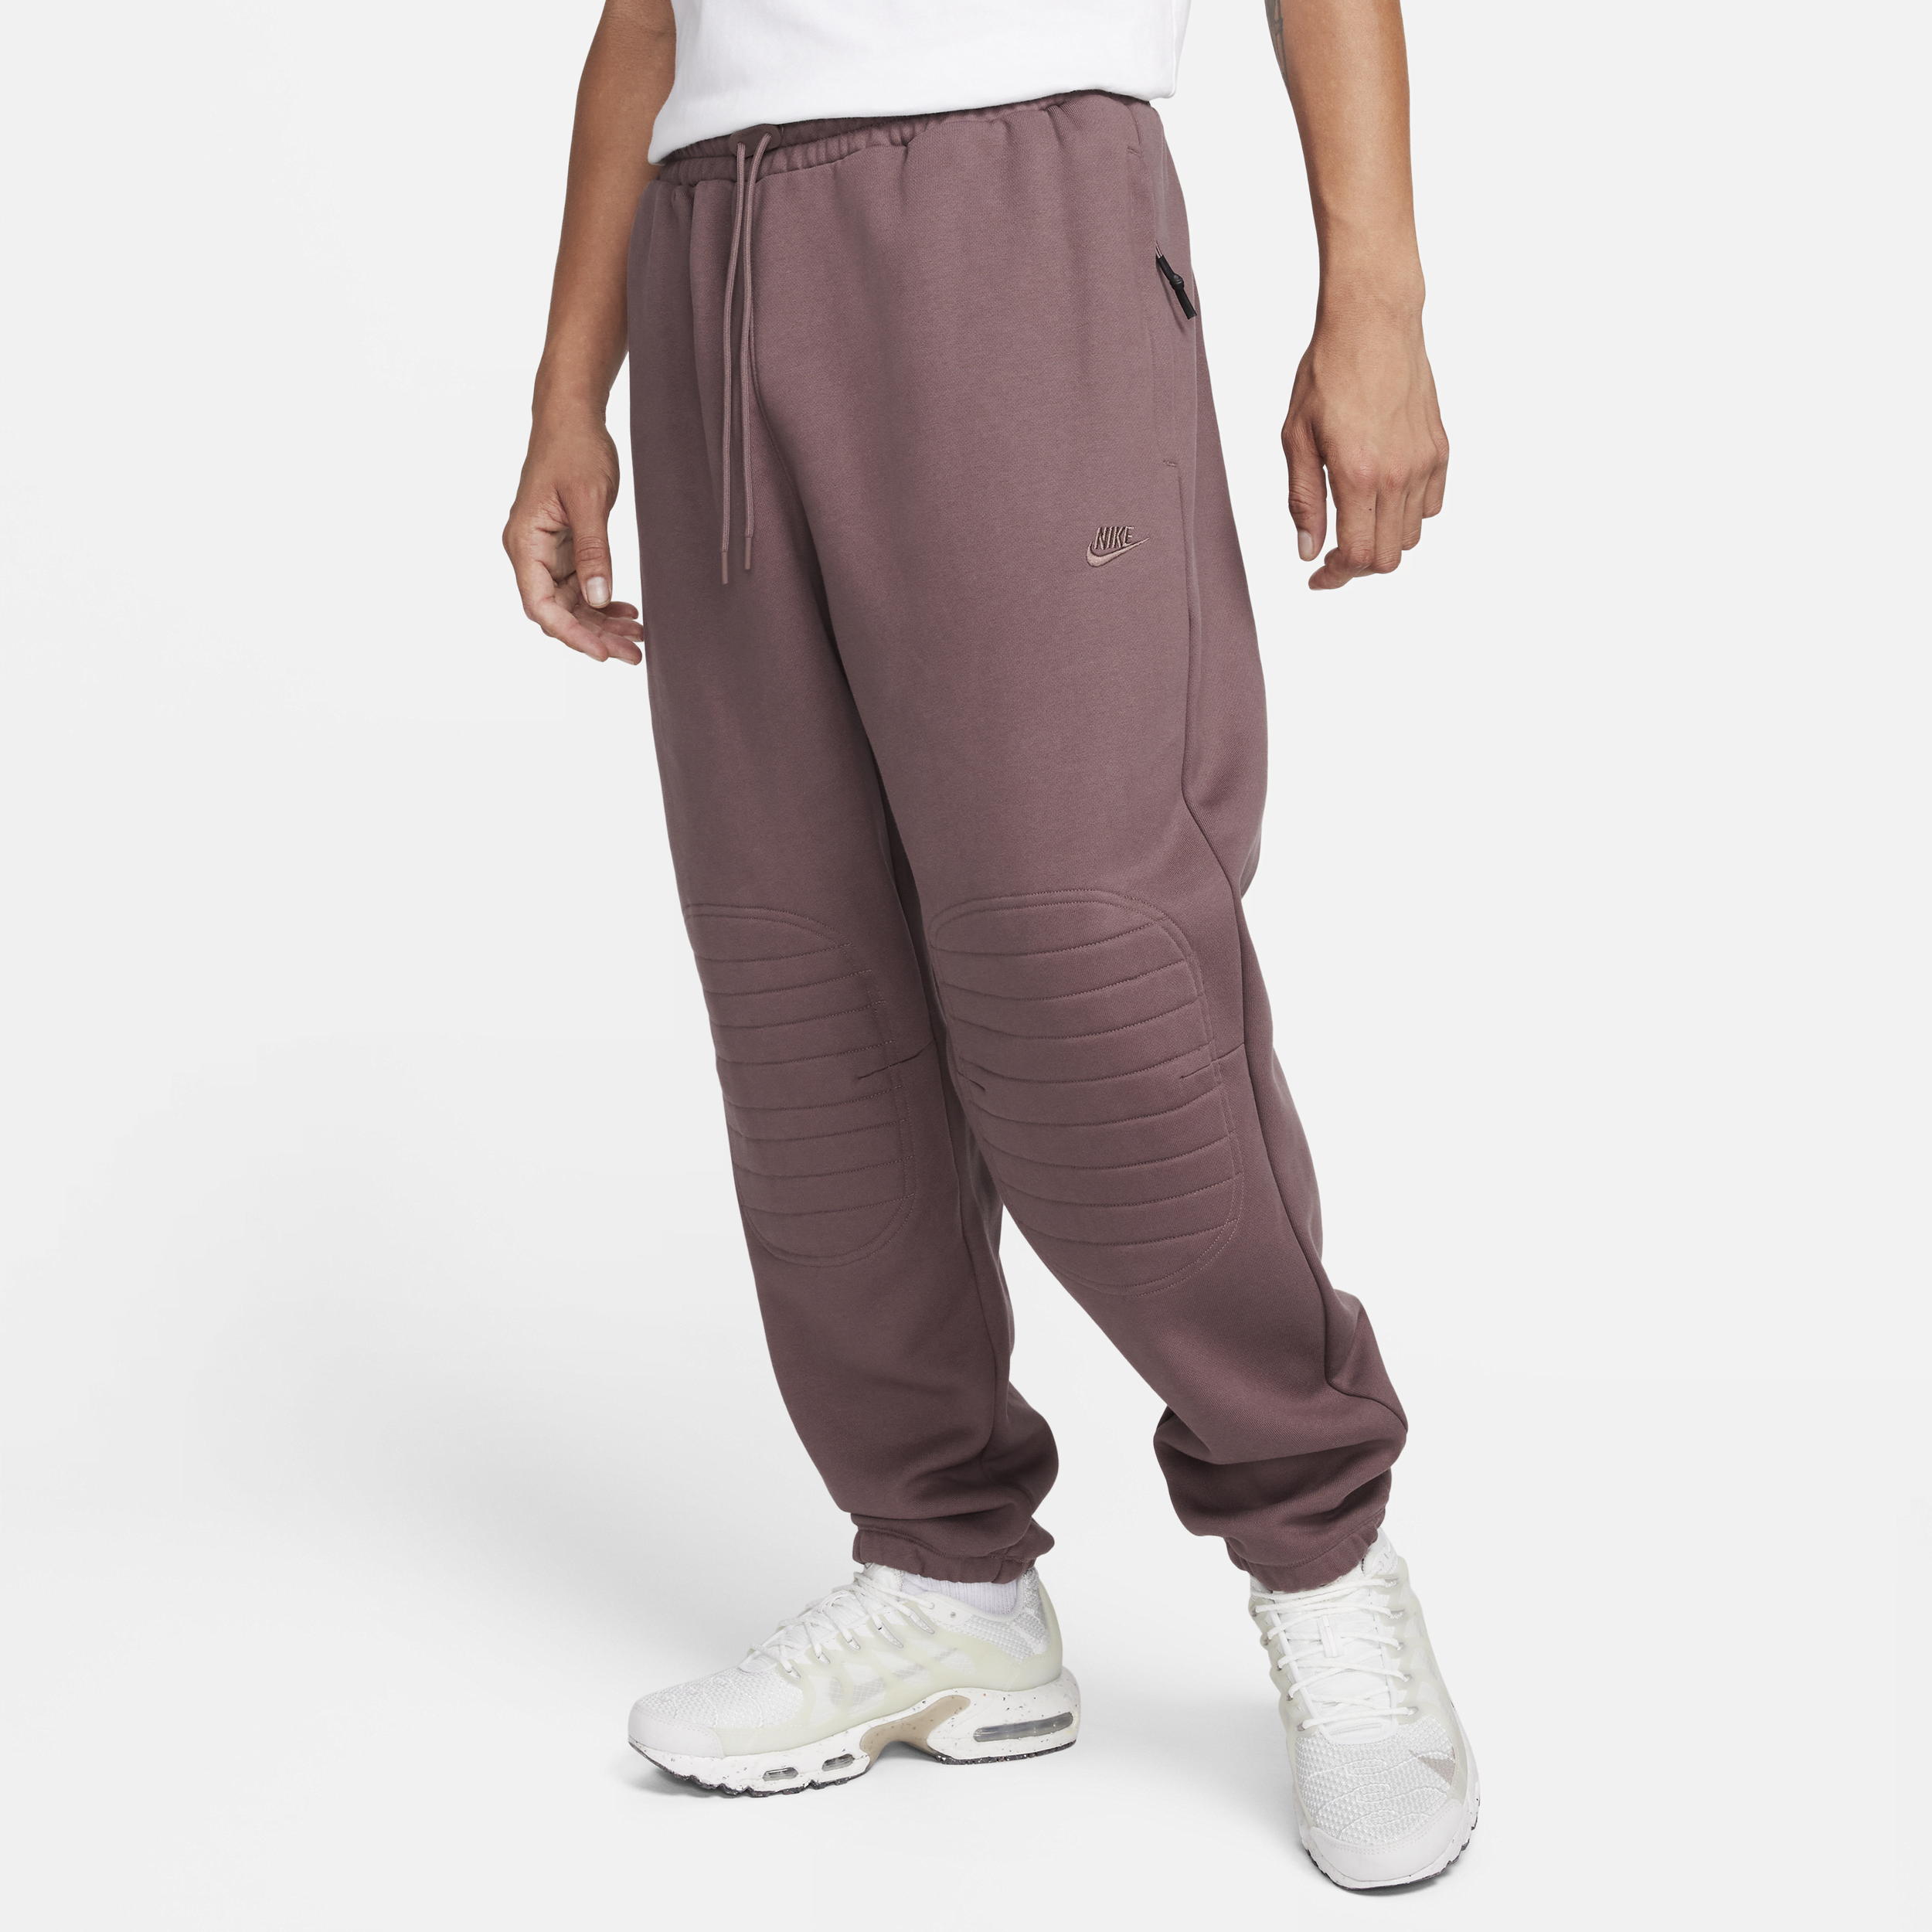 Pantaloni in fleece per l'inverno Nike Sportswear Therma-FIT Tech Pack – Uomo - Marrone